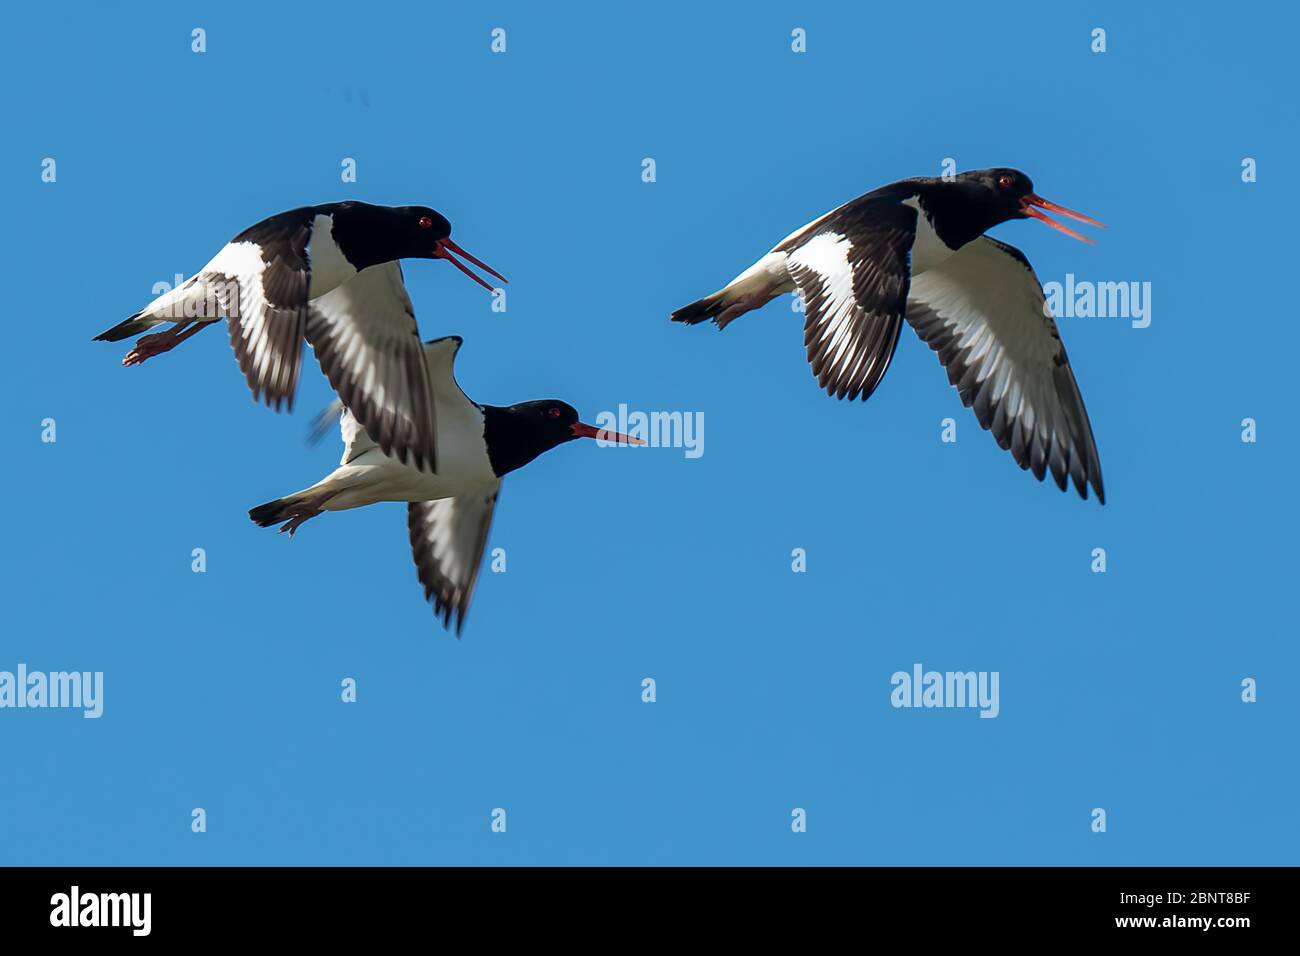 Three Oystercatcher birds in flight against a blue sky Stock Photo